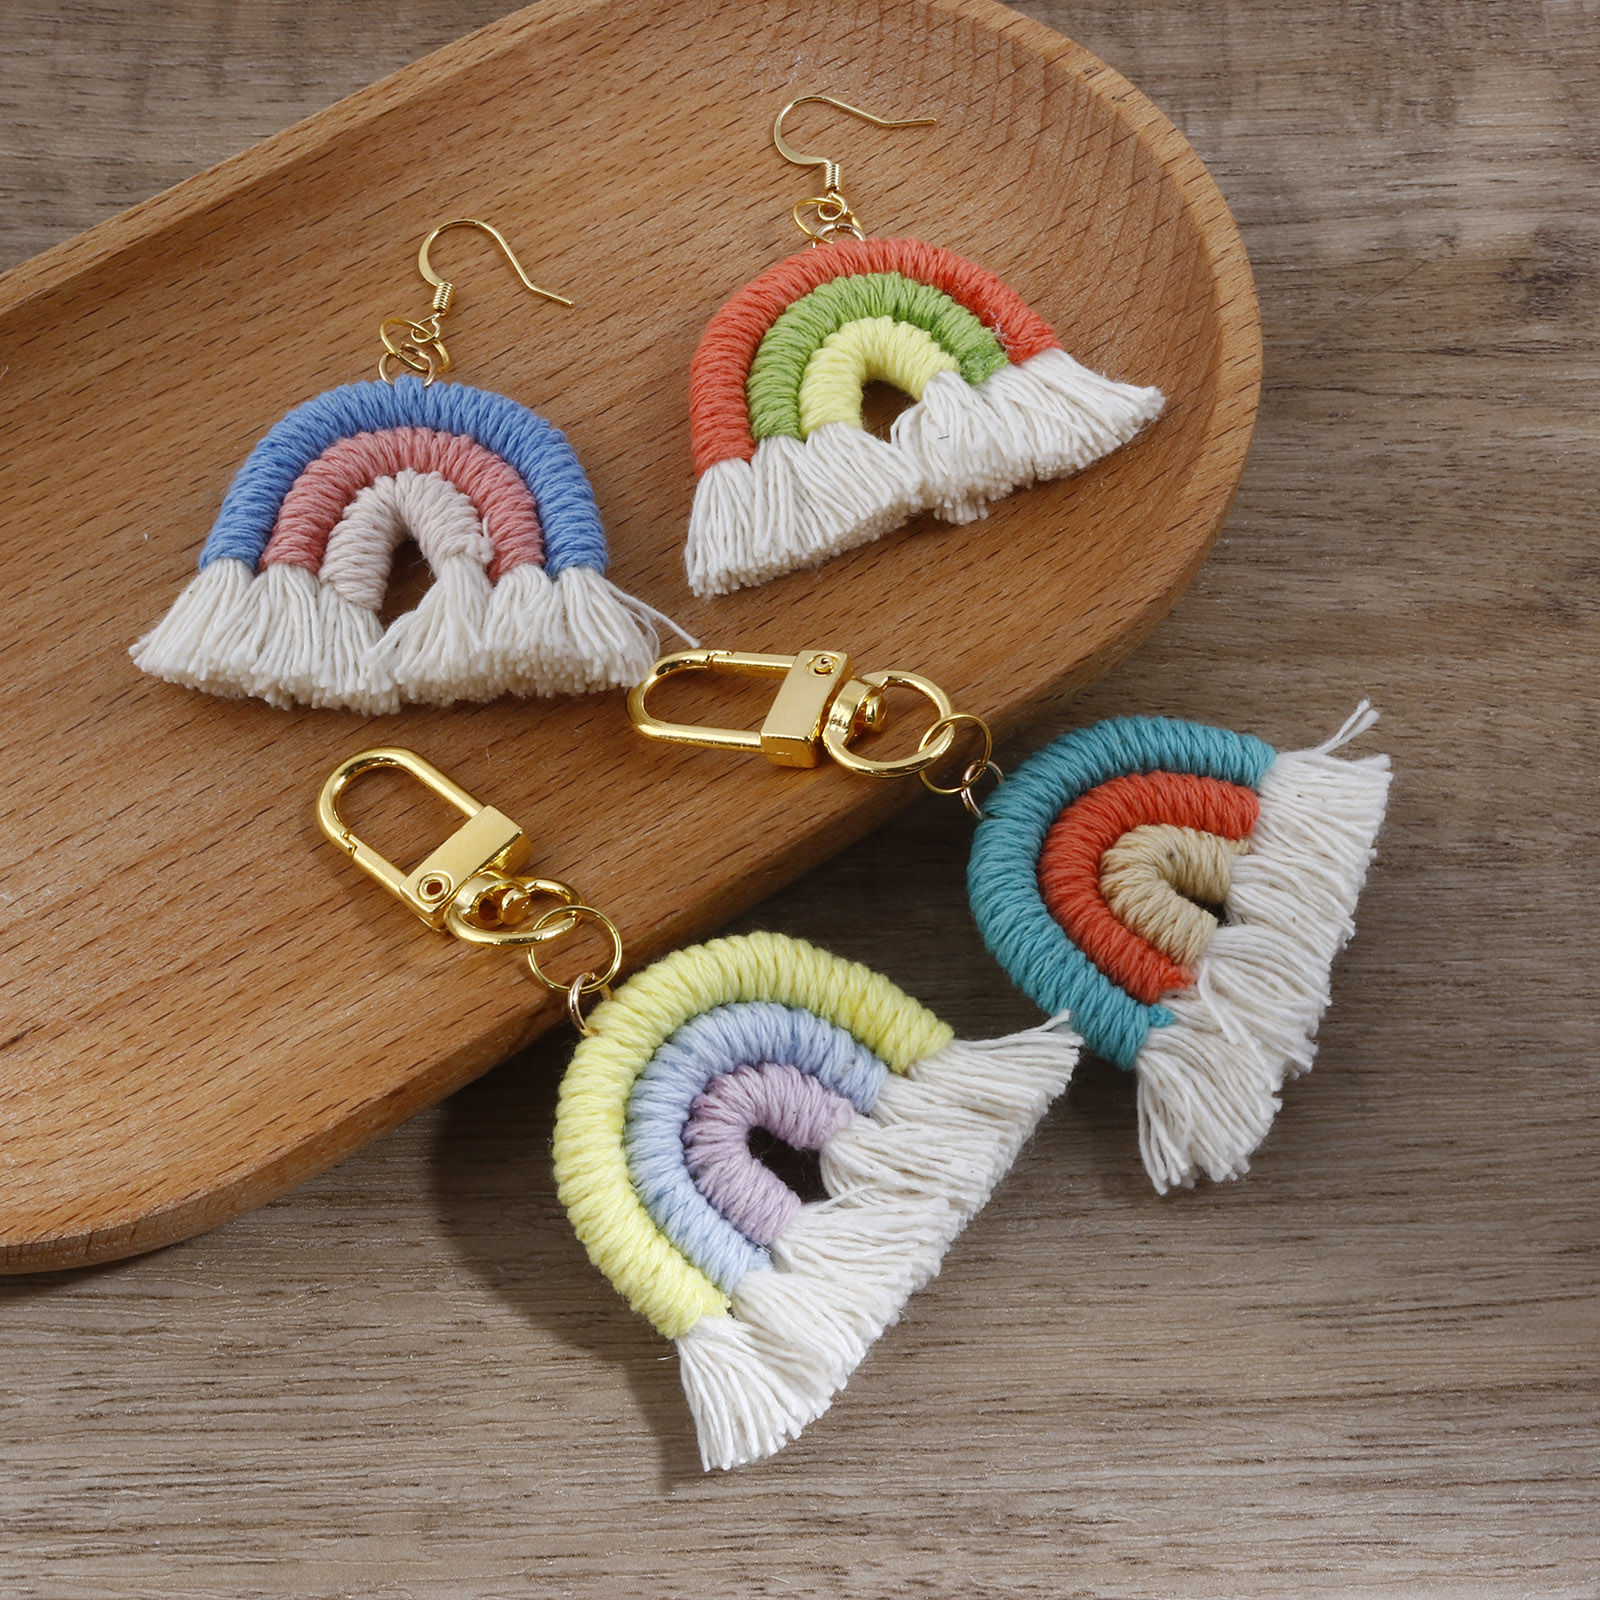 Picture of Cotton Tassel Pendants Rainbow Multicolor Handmade 4cm x 3.5cm, 1 Piece